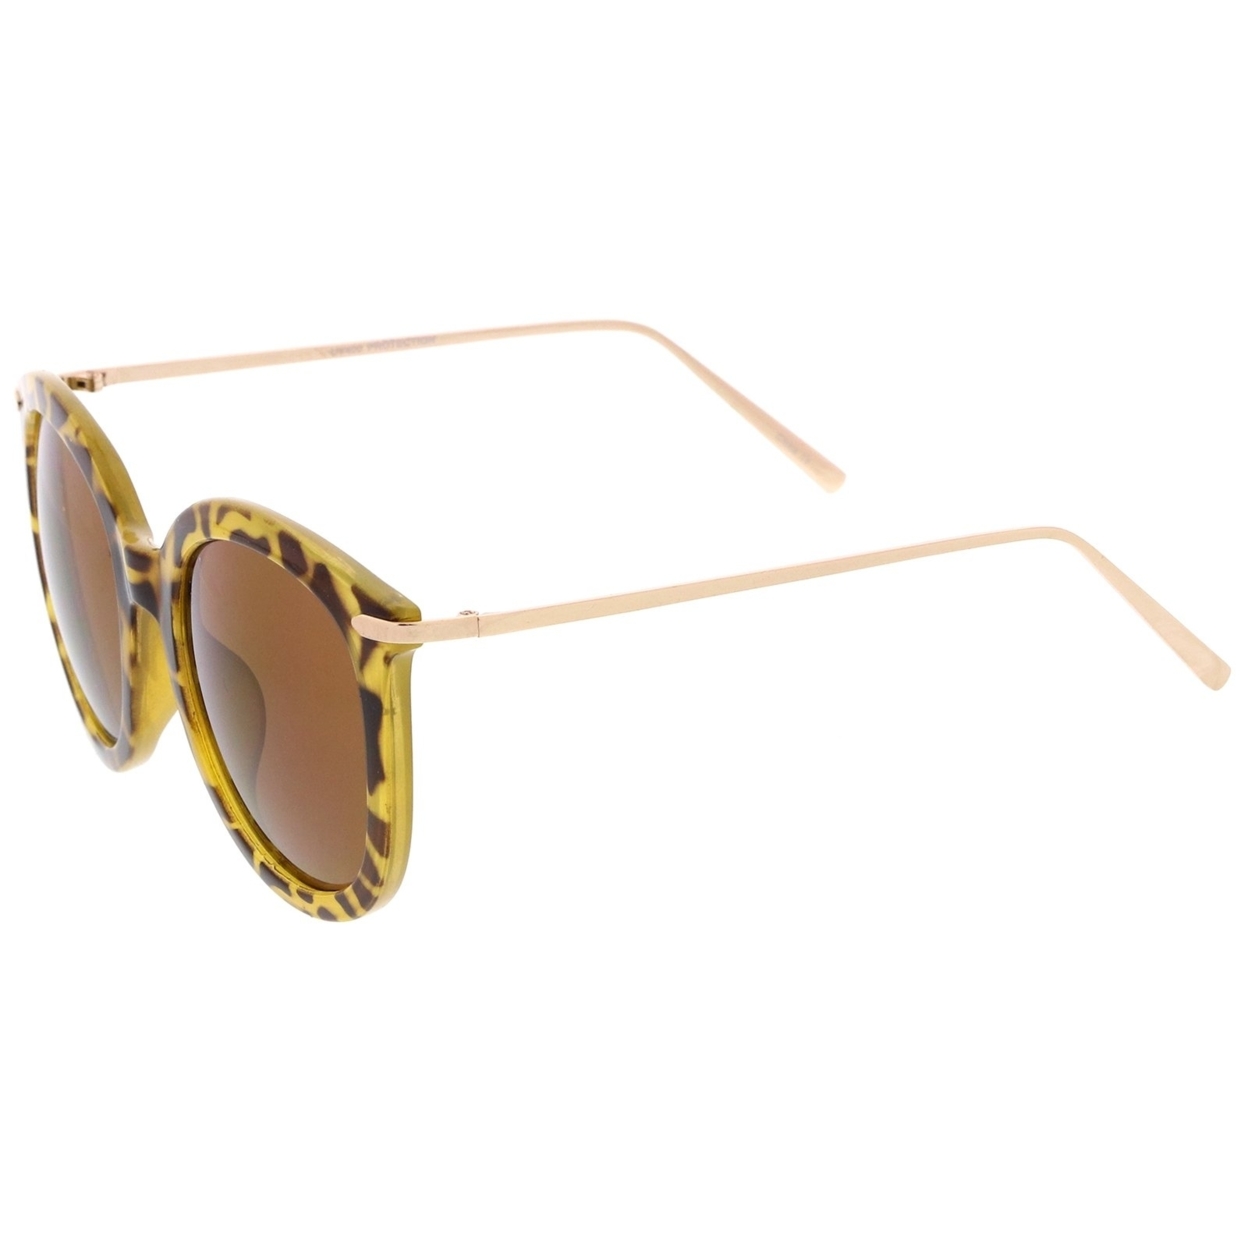 Women's Classic Oversize Ultra Slim Metal Temple Round Sunglasses 56mm - Tortoise-Gold / Brown